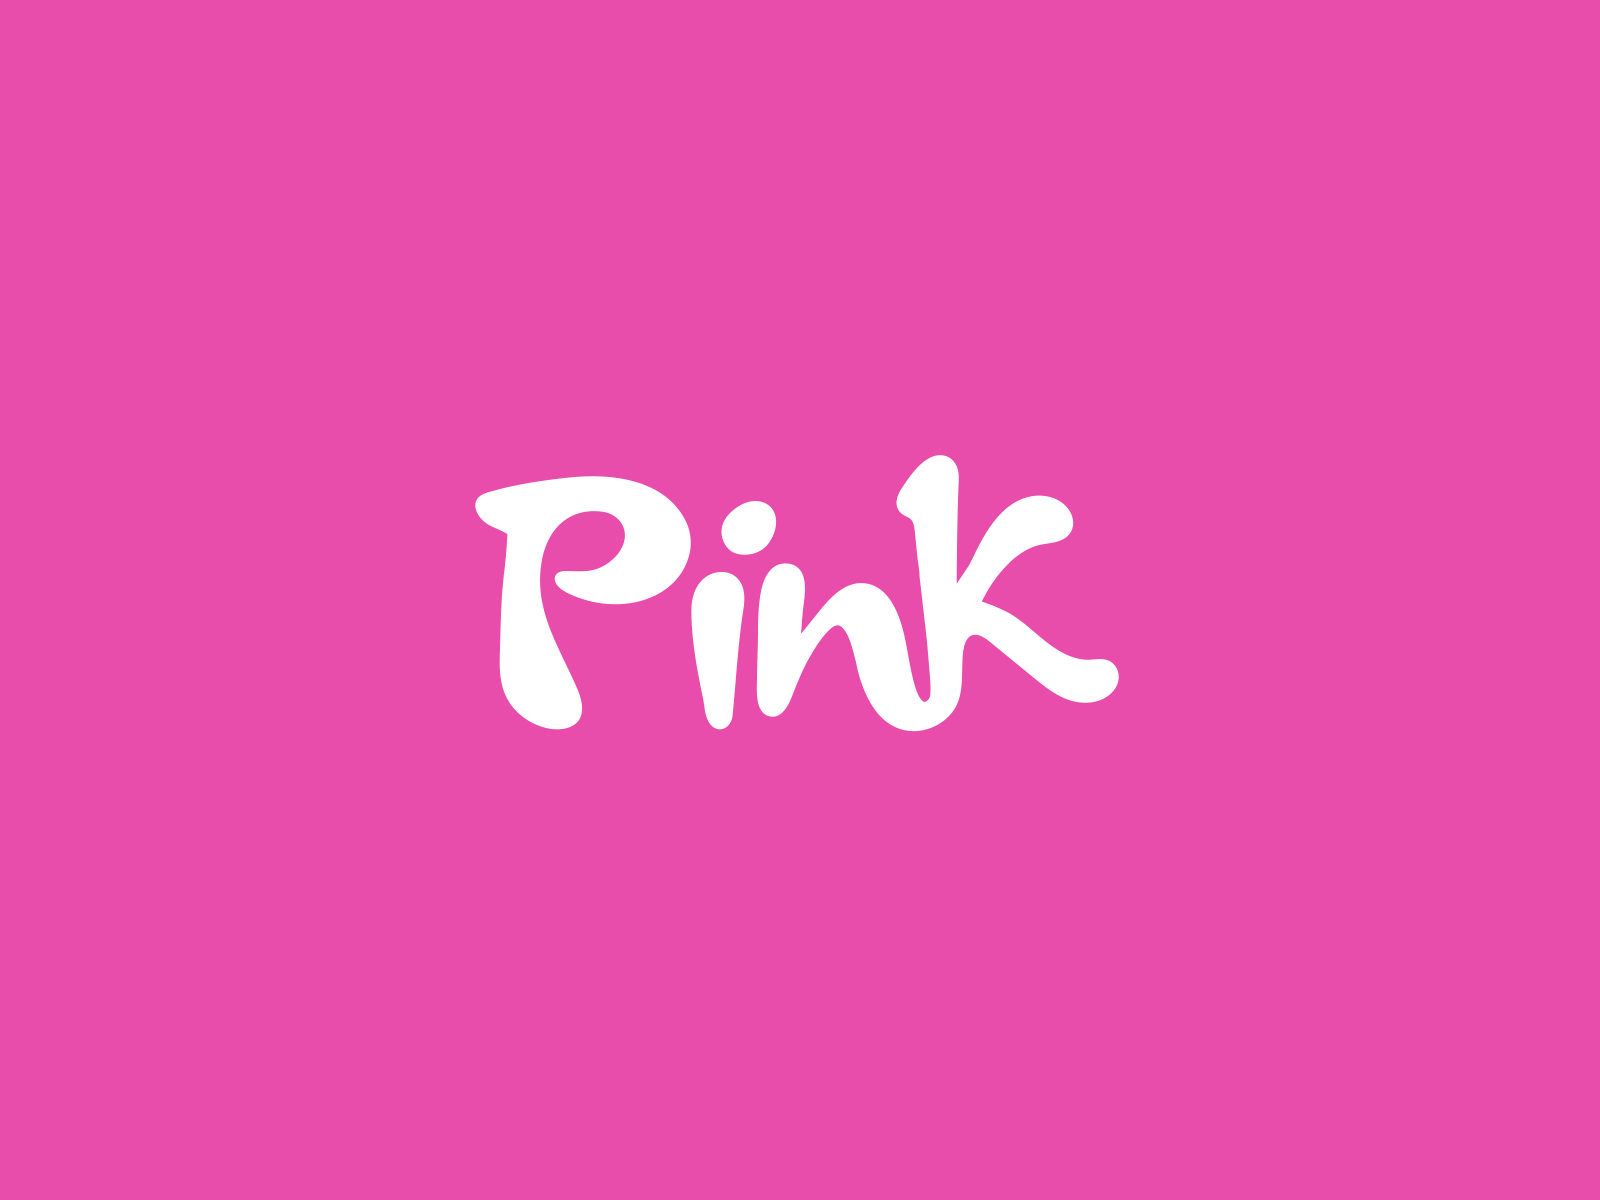 Pinkblue Brand Identity Design by Baianat on Dribbble